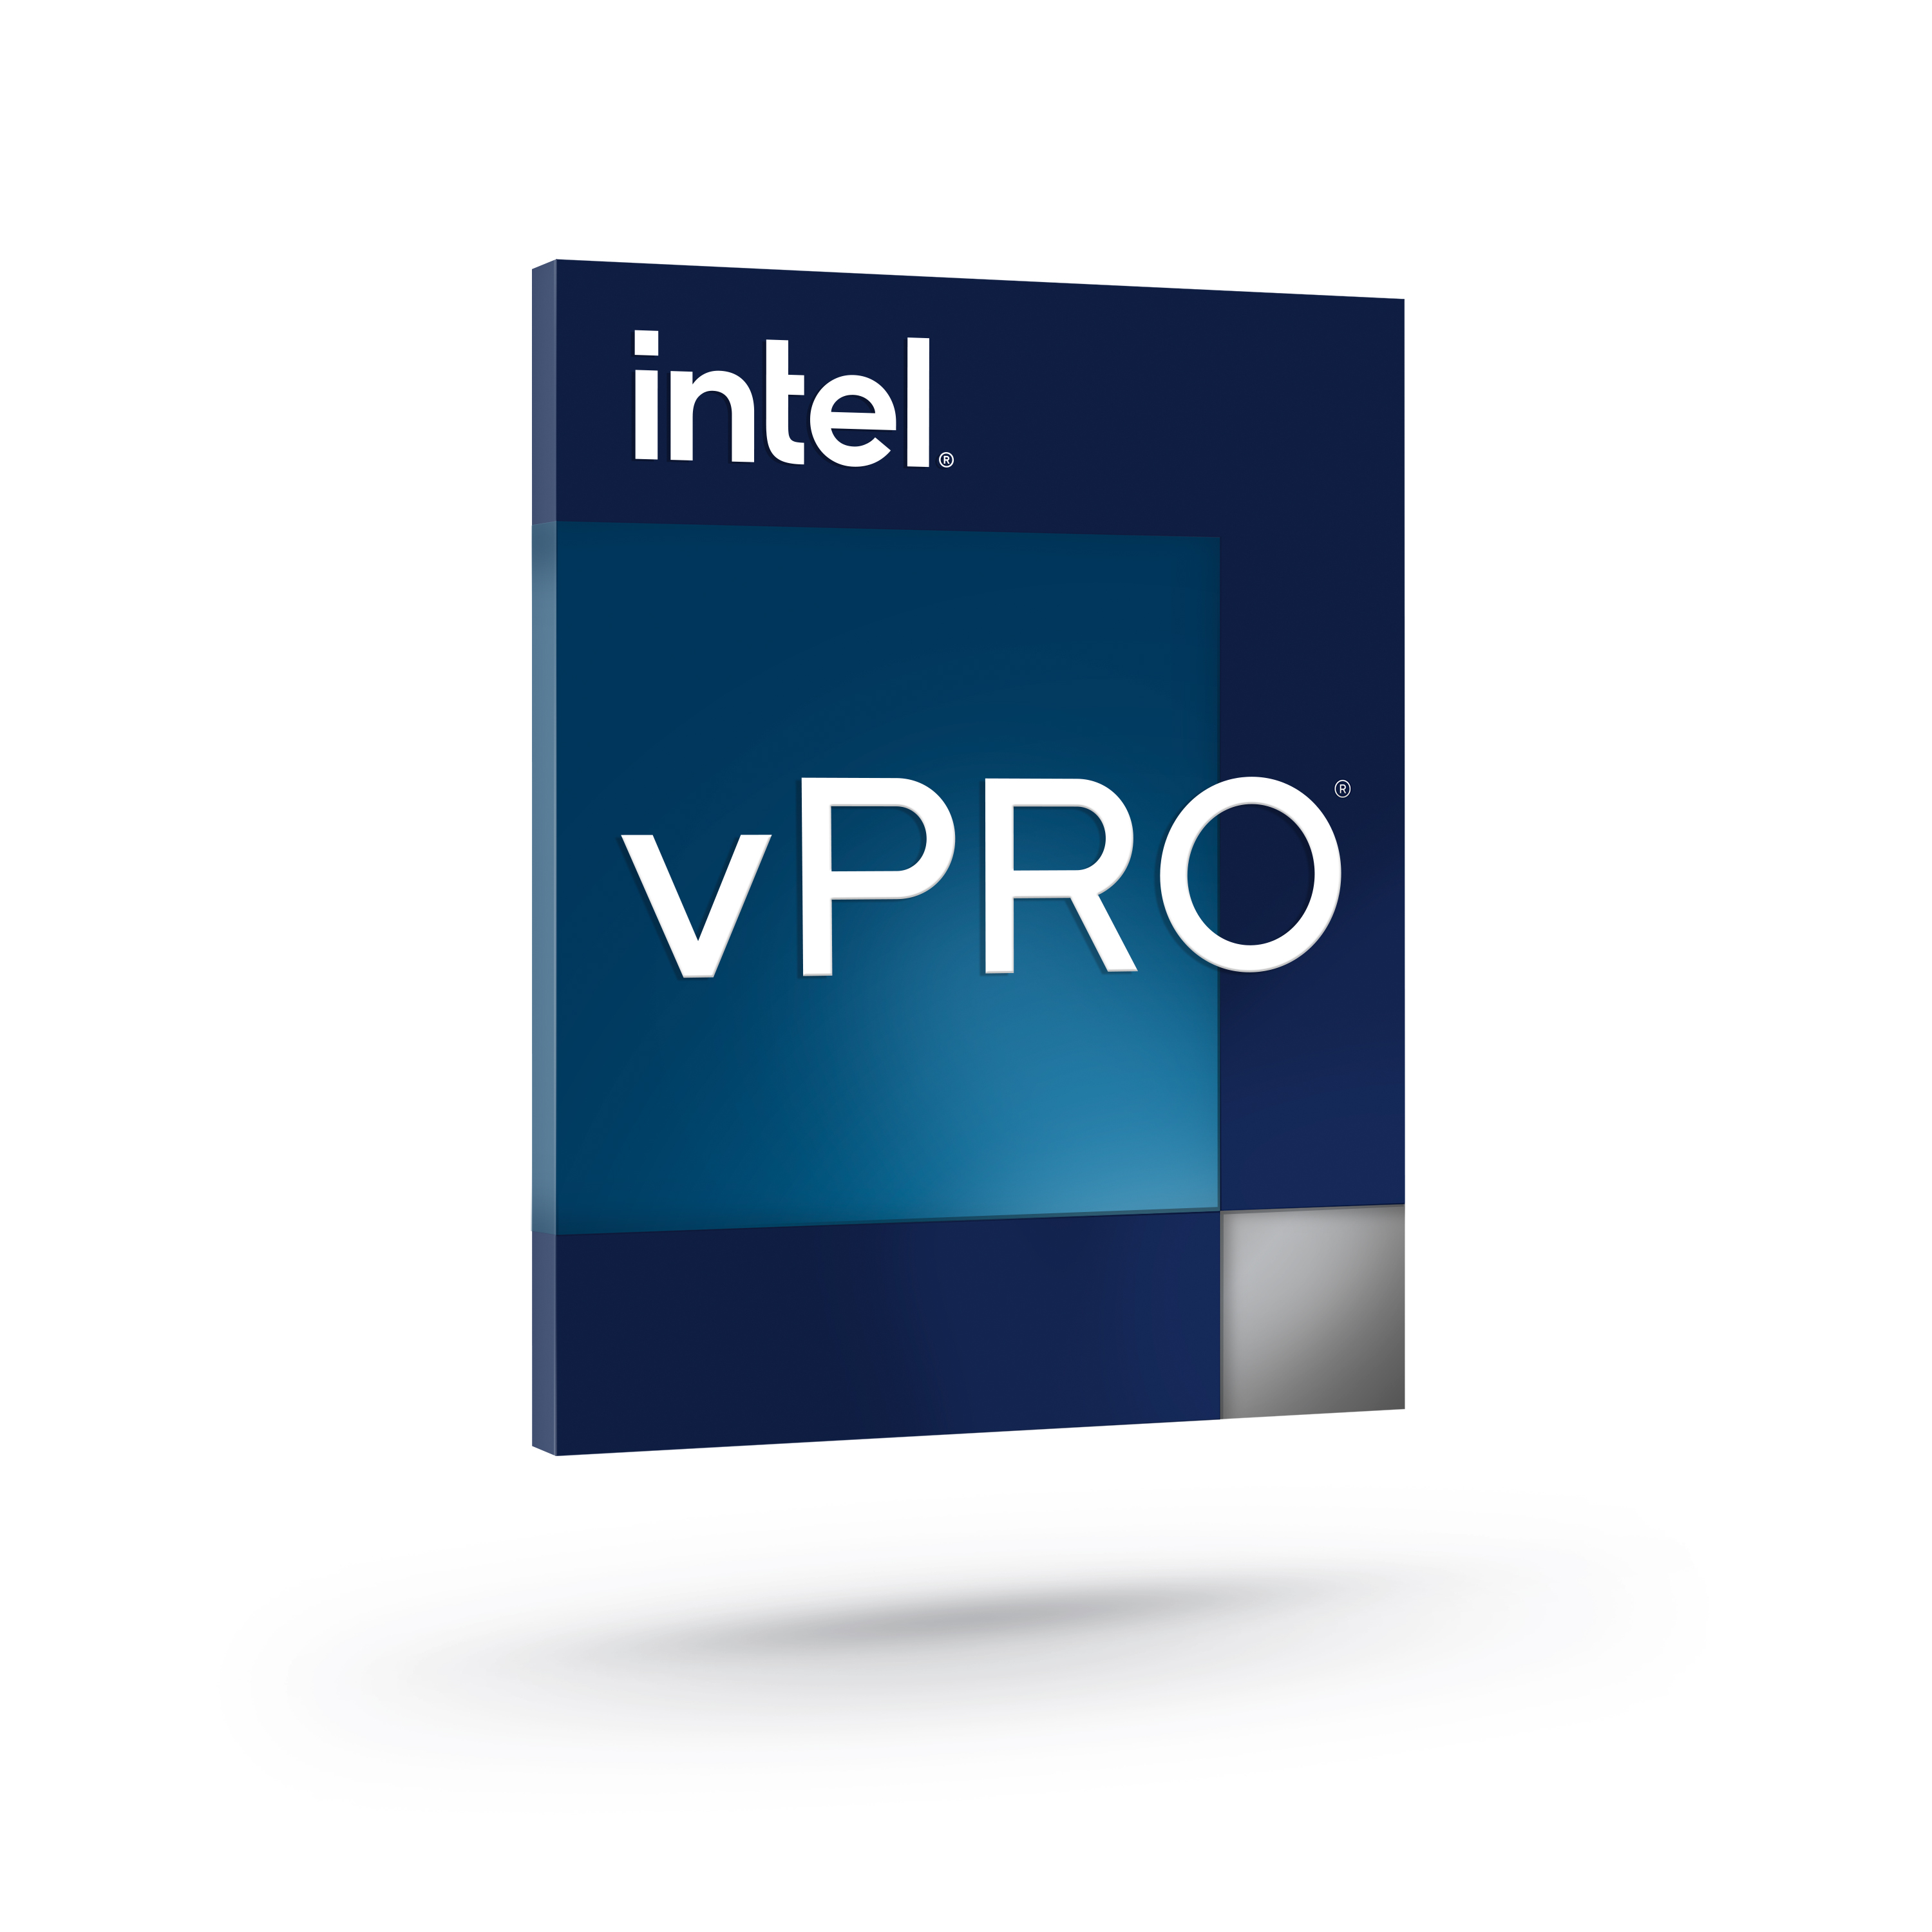 Intel Announces New vPro Platform with 13th Gen Intel Core